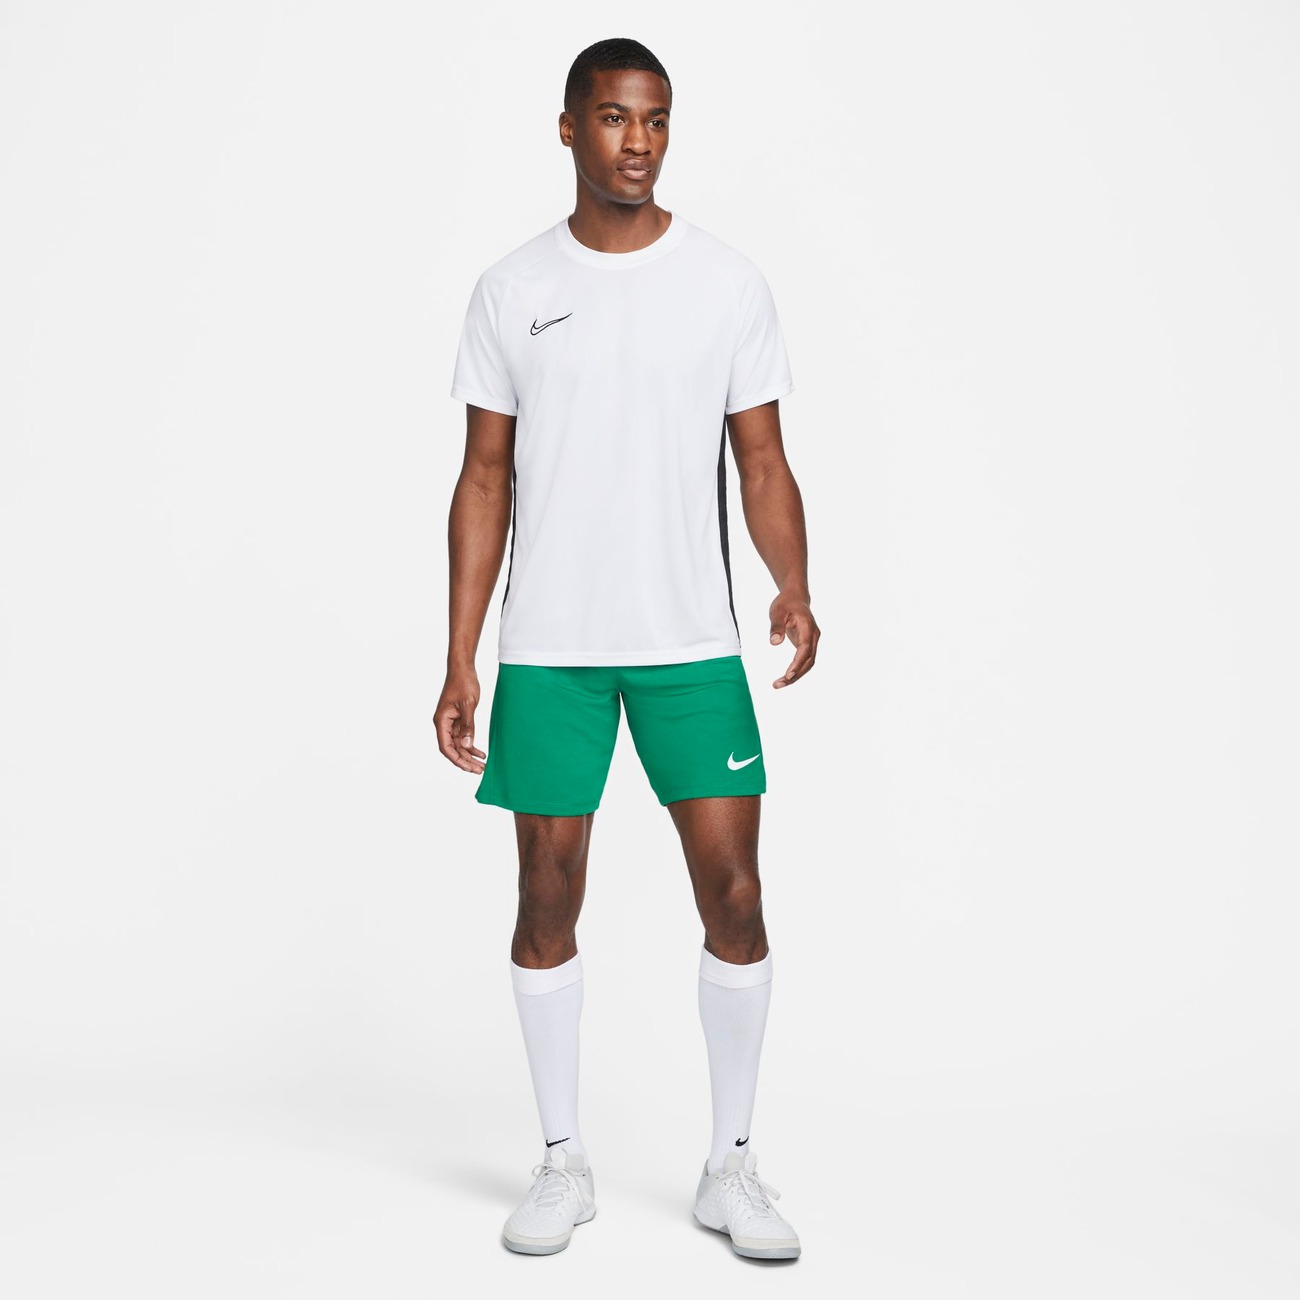 Conjunto COLORIDO NIKE Kit Shorts Bermuda + Camiseta Nike Masculina Dri Fit  e Refletivo MAIS VENDIDO DO BRASIL - Escorrega o Preço